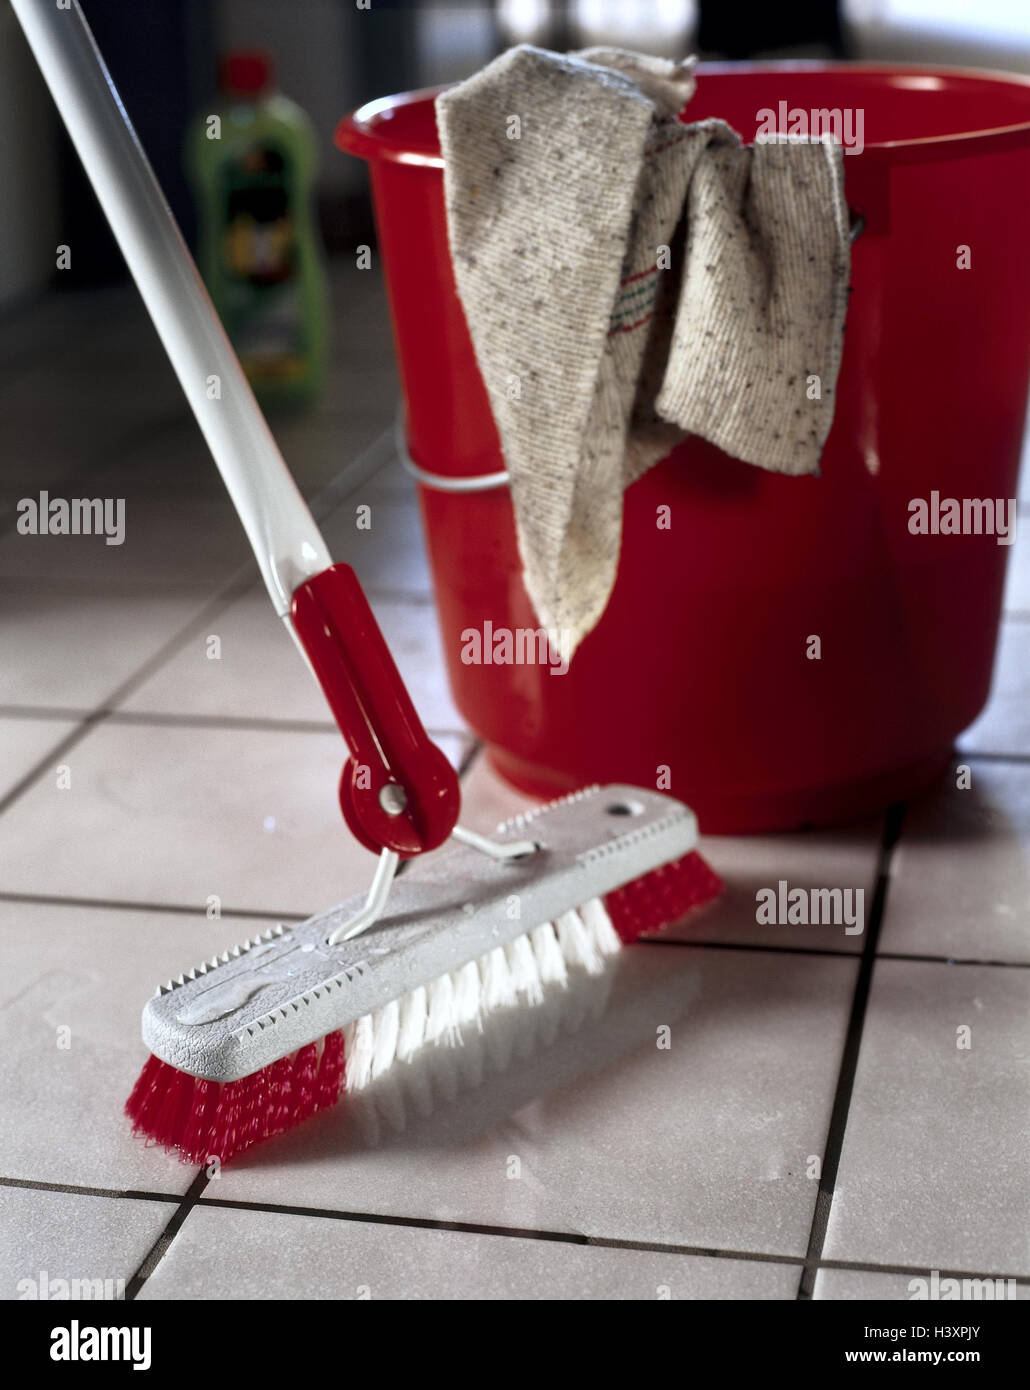 Floor Brush Cleaning stock image. Image of tile, washing - 31399683